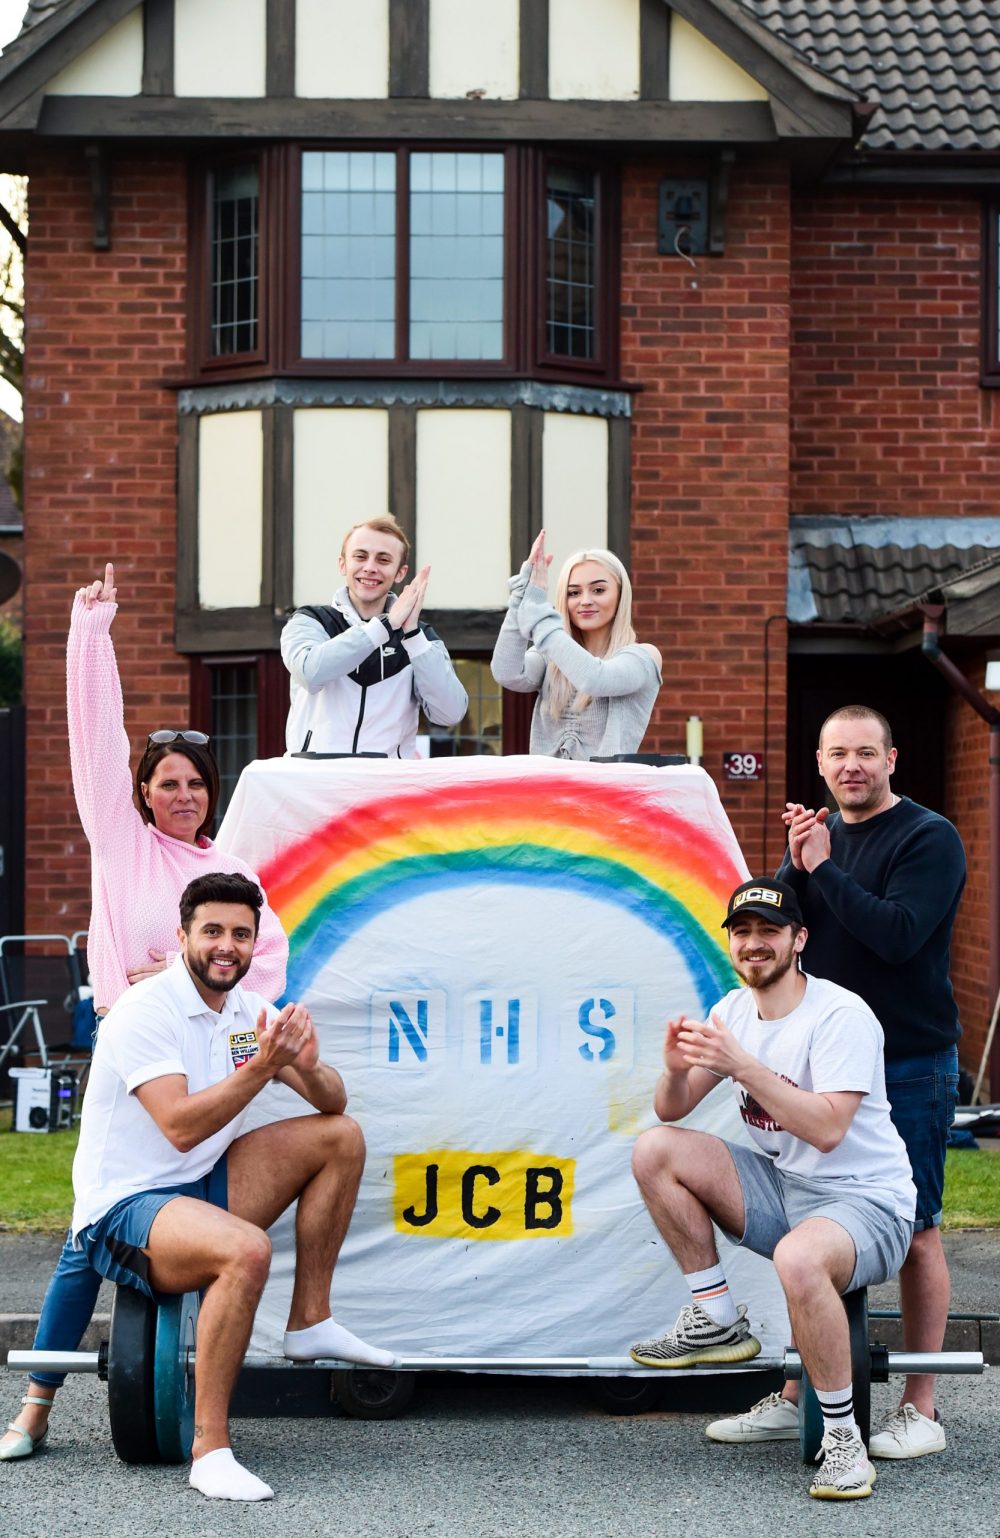 JCB sponsored athletes Ben and Adam smash NHS charity target with marathon effort